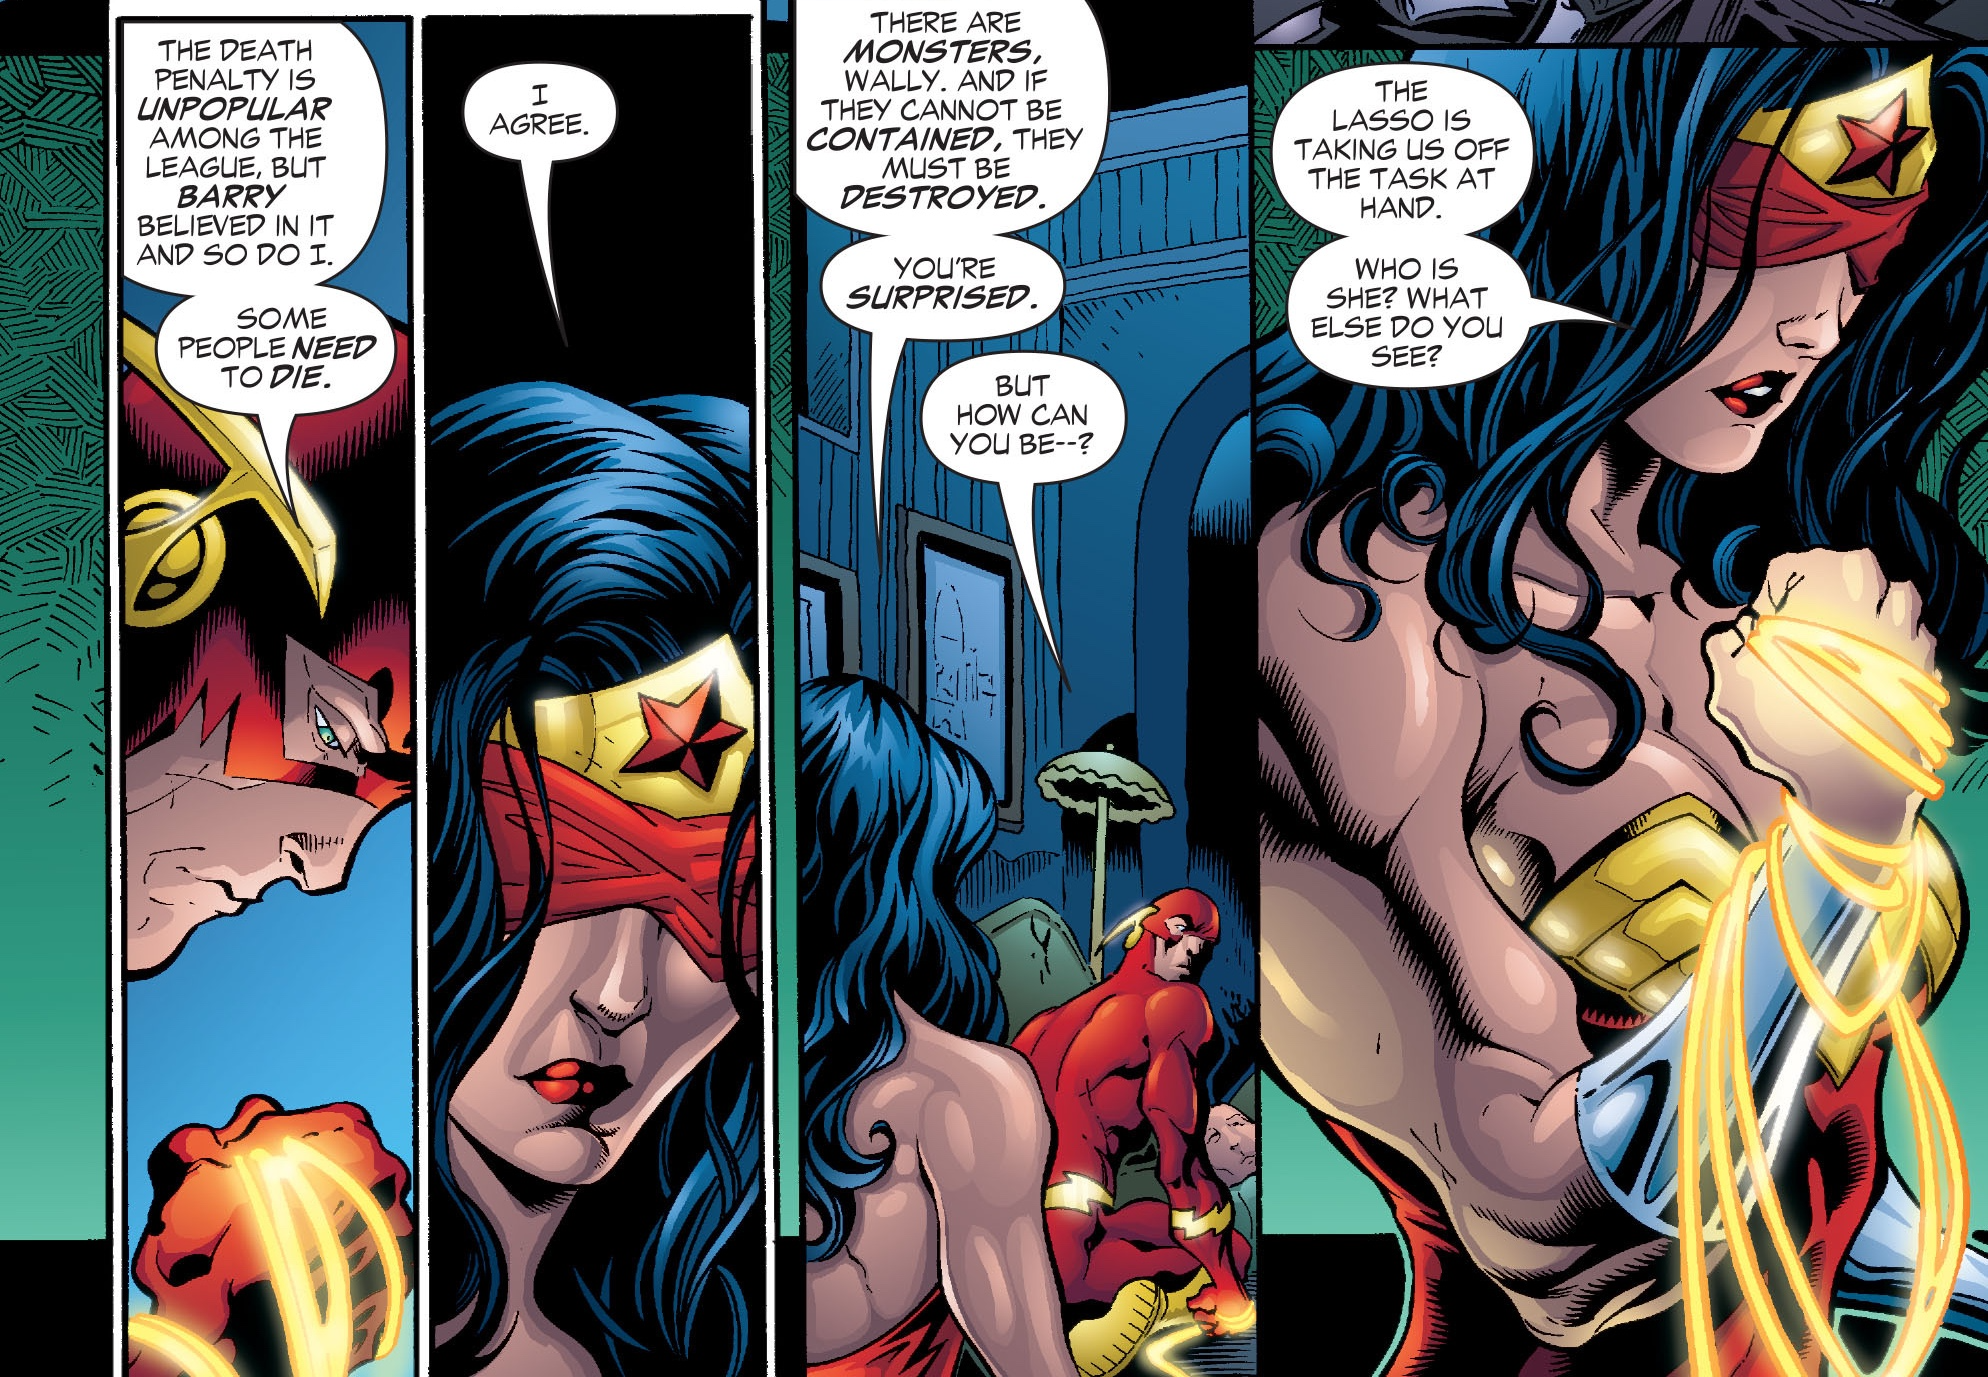 Flash Wonder Woman kill villains